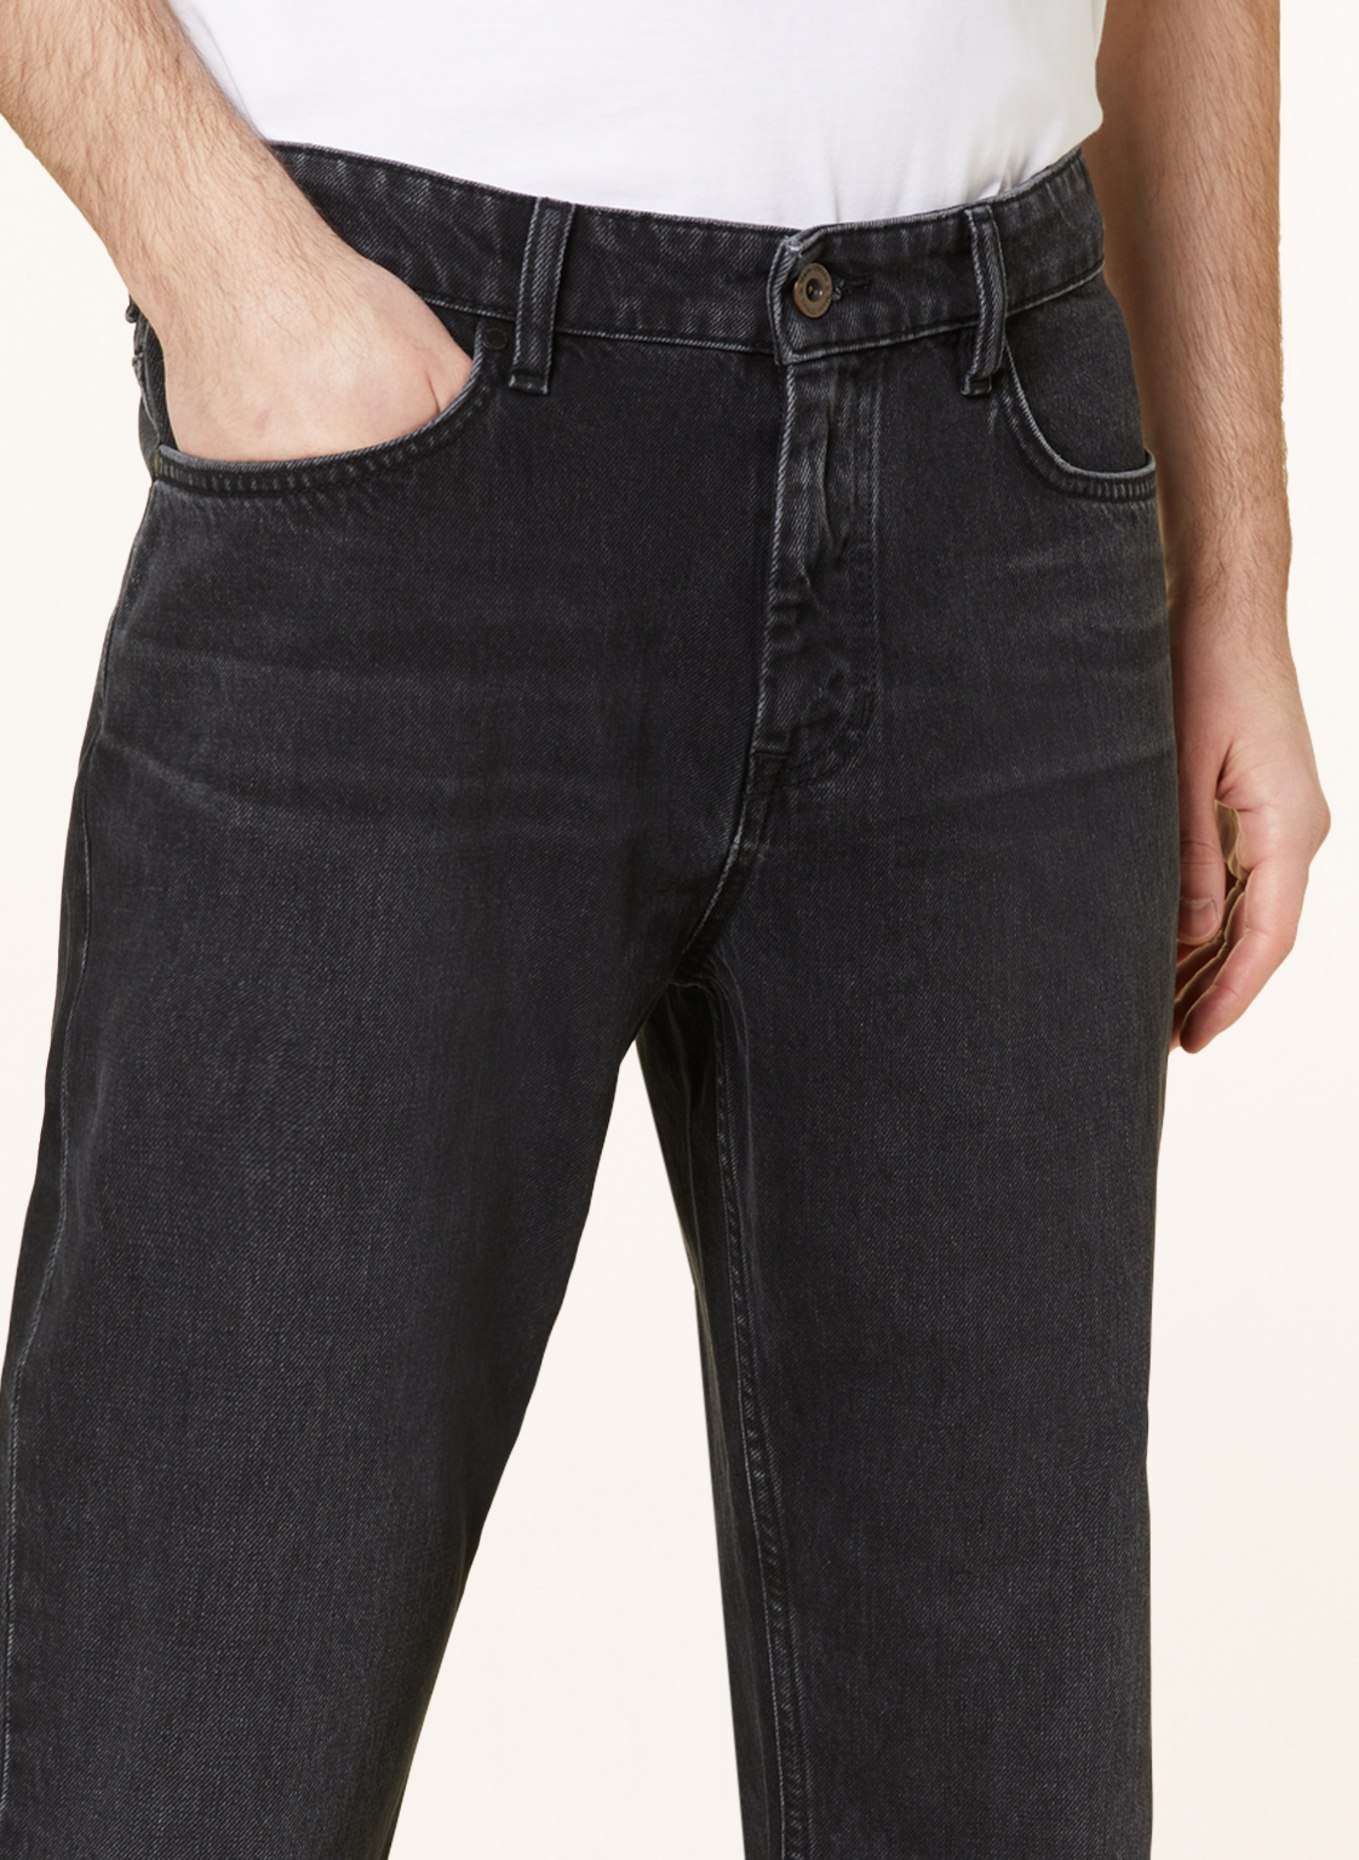 Marc O'Polo Jeans Tapered Fit, Farbe: 030 Black od black wash (Bild 5)